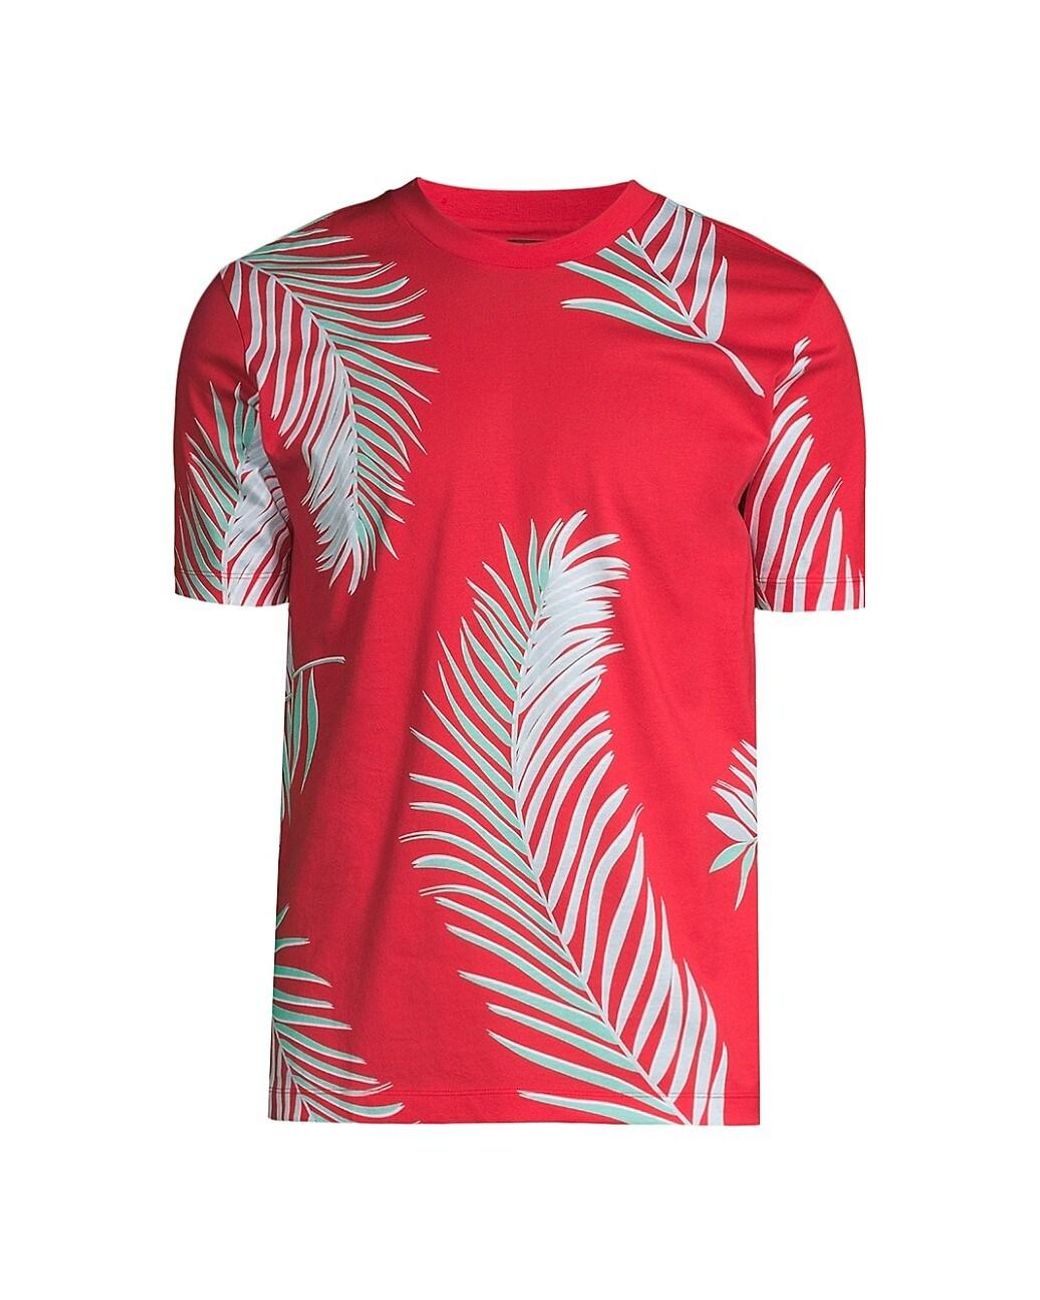 BOSS by HUGO BOSS Tiburt 295 Cotton T-shirt in Bright Red (Red) for Men ...